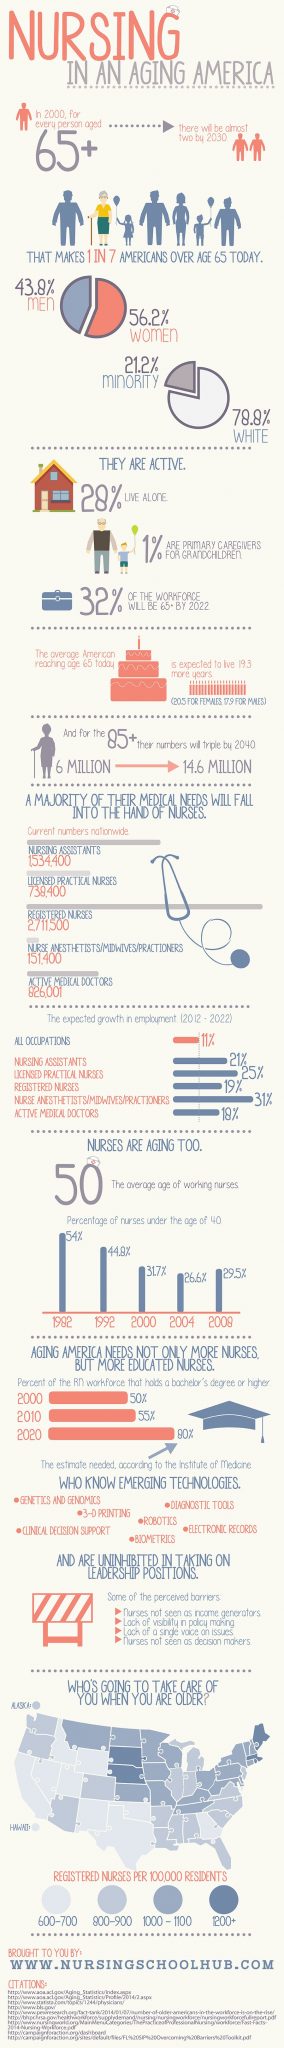 Nursing an Aging America infographic